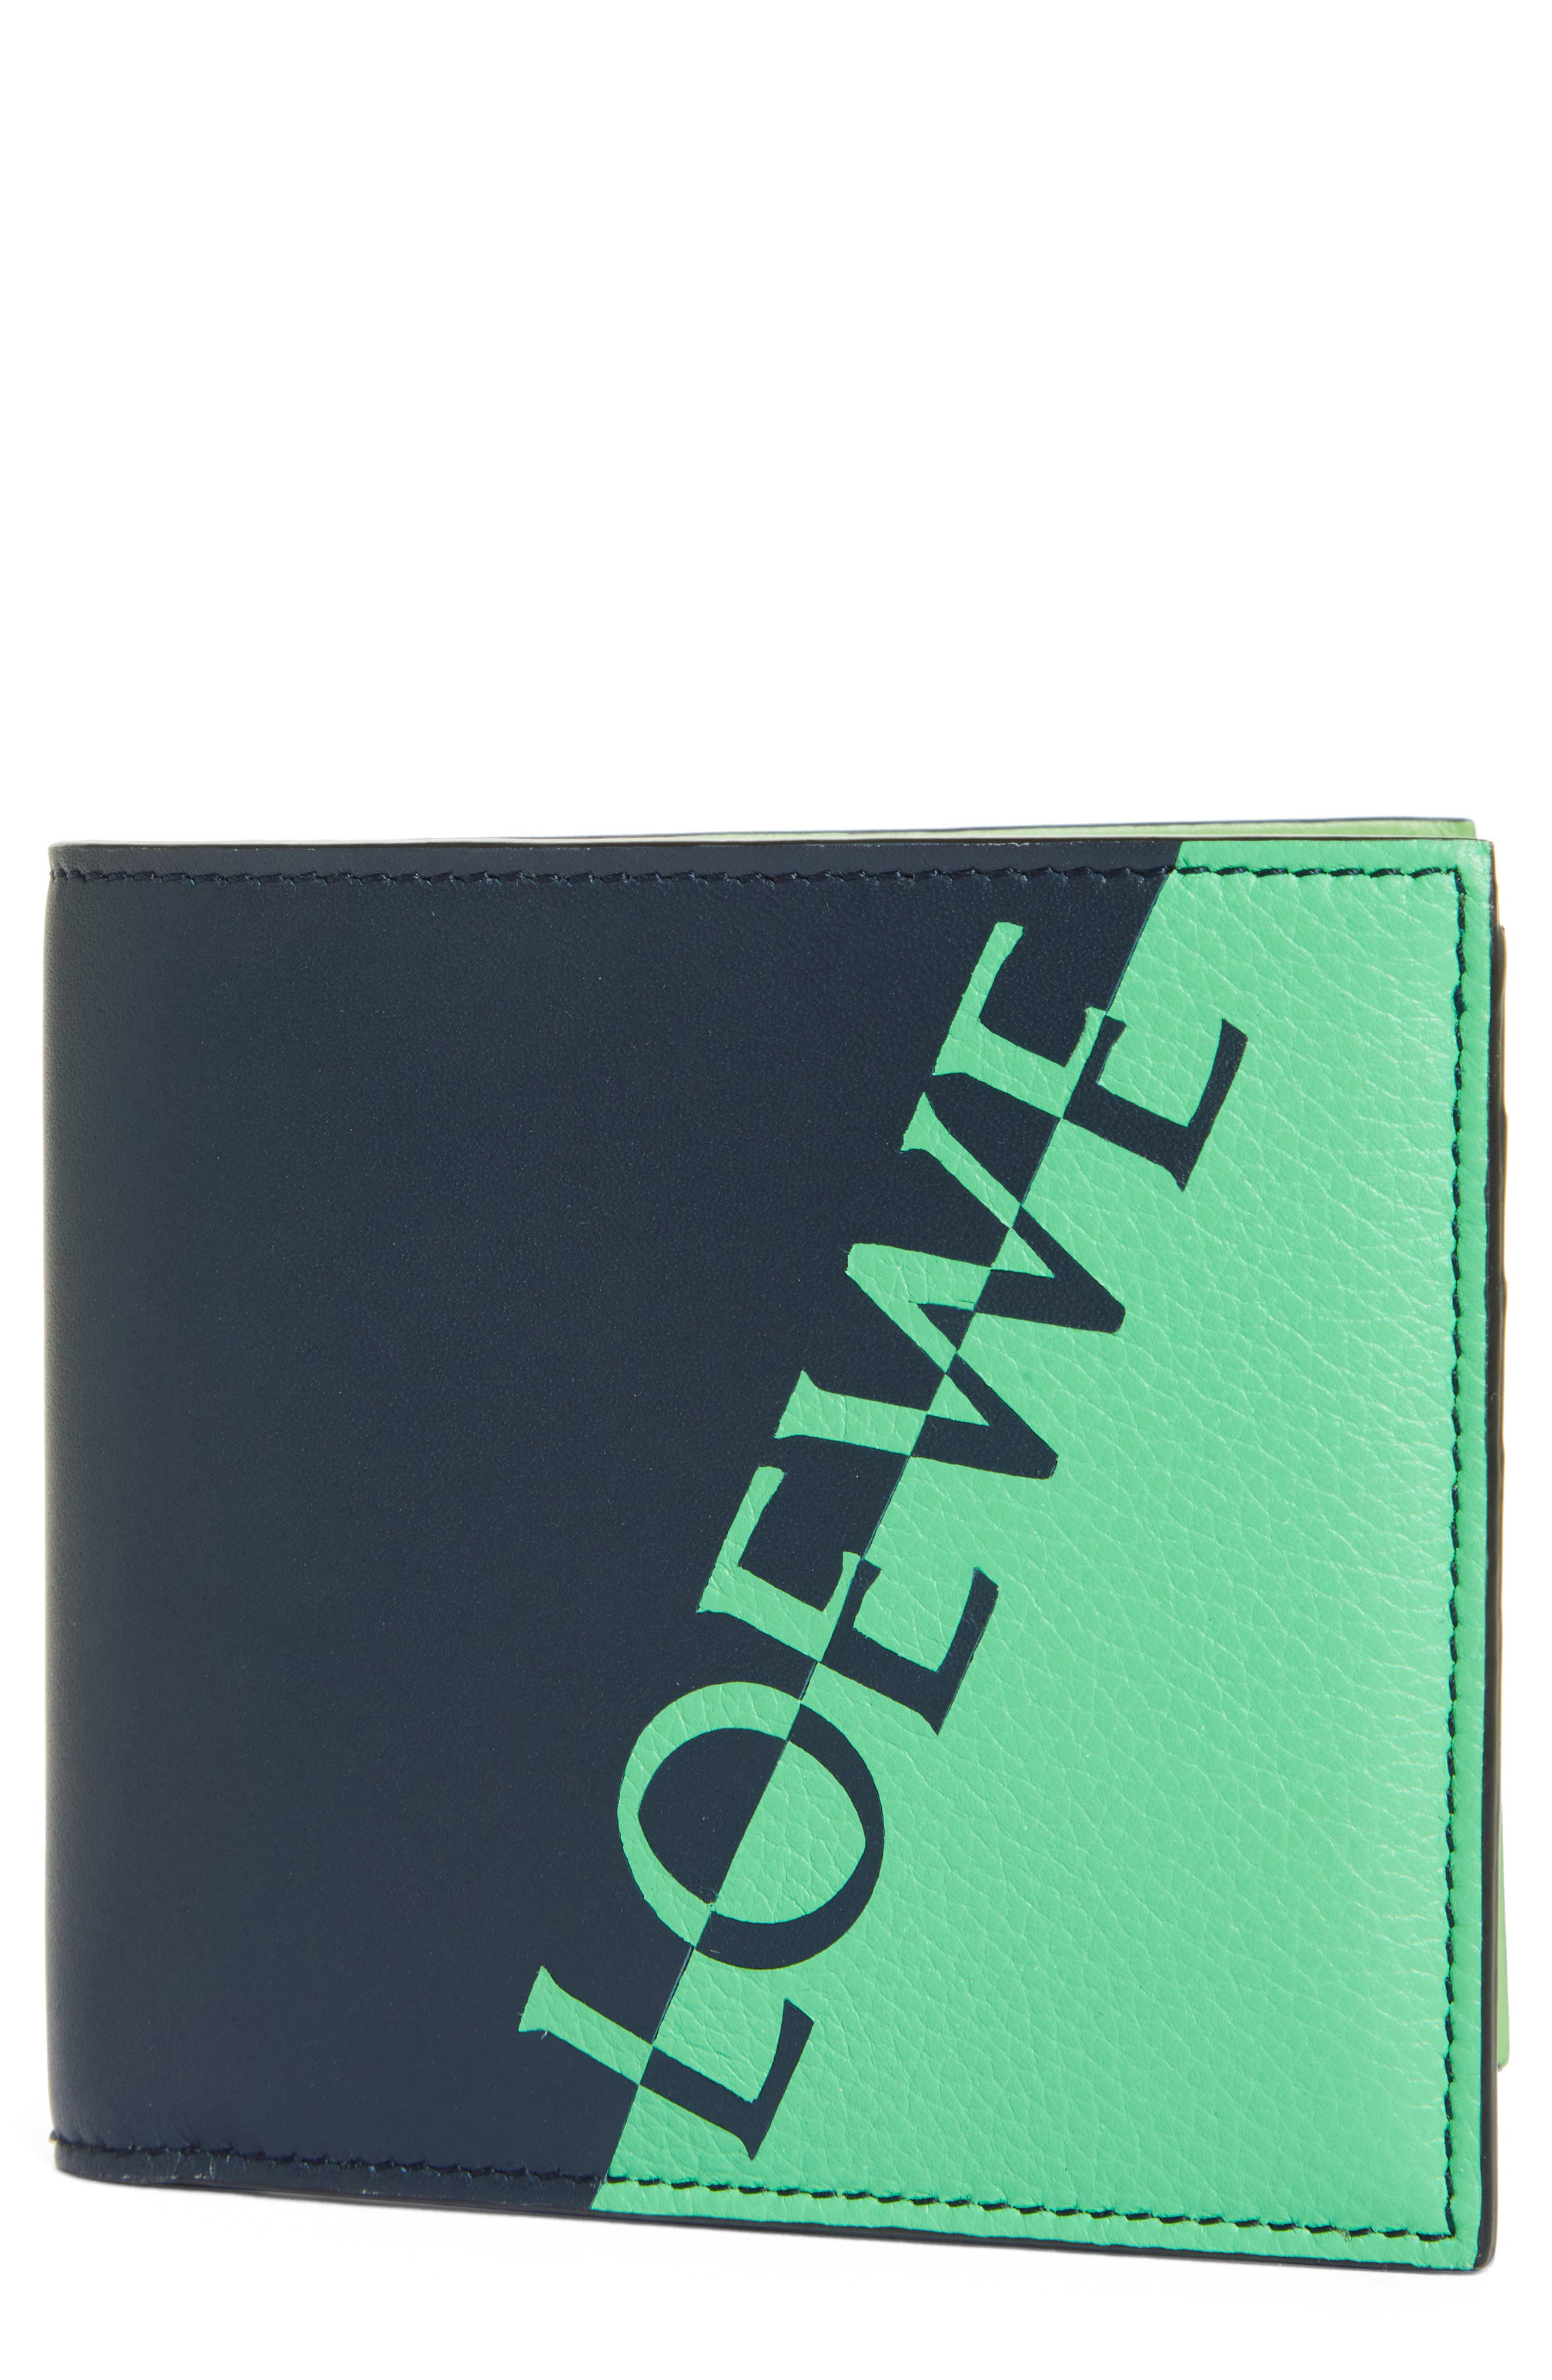 Loewe Split Logo Leather Bifold Wallet in Apple Green/Deep Navy at Nordstrom